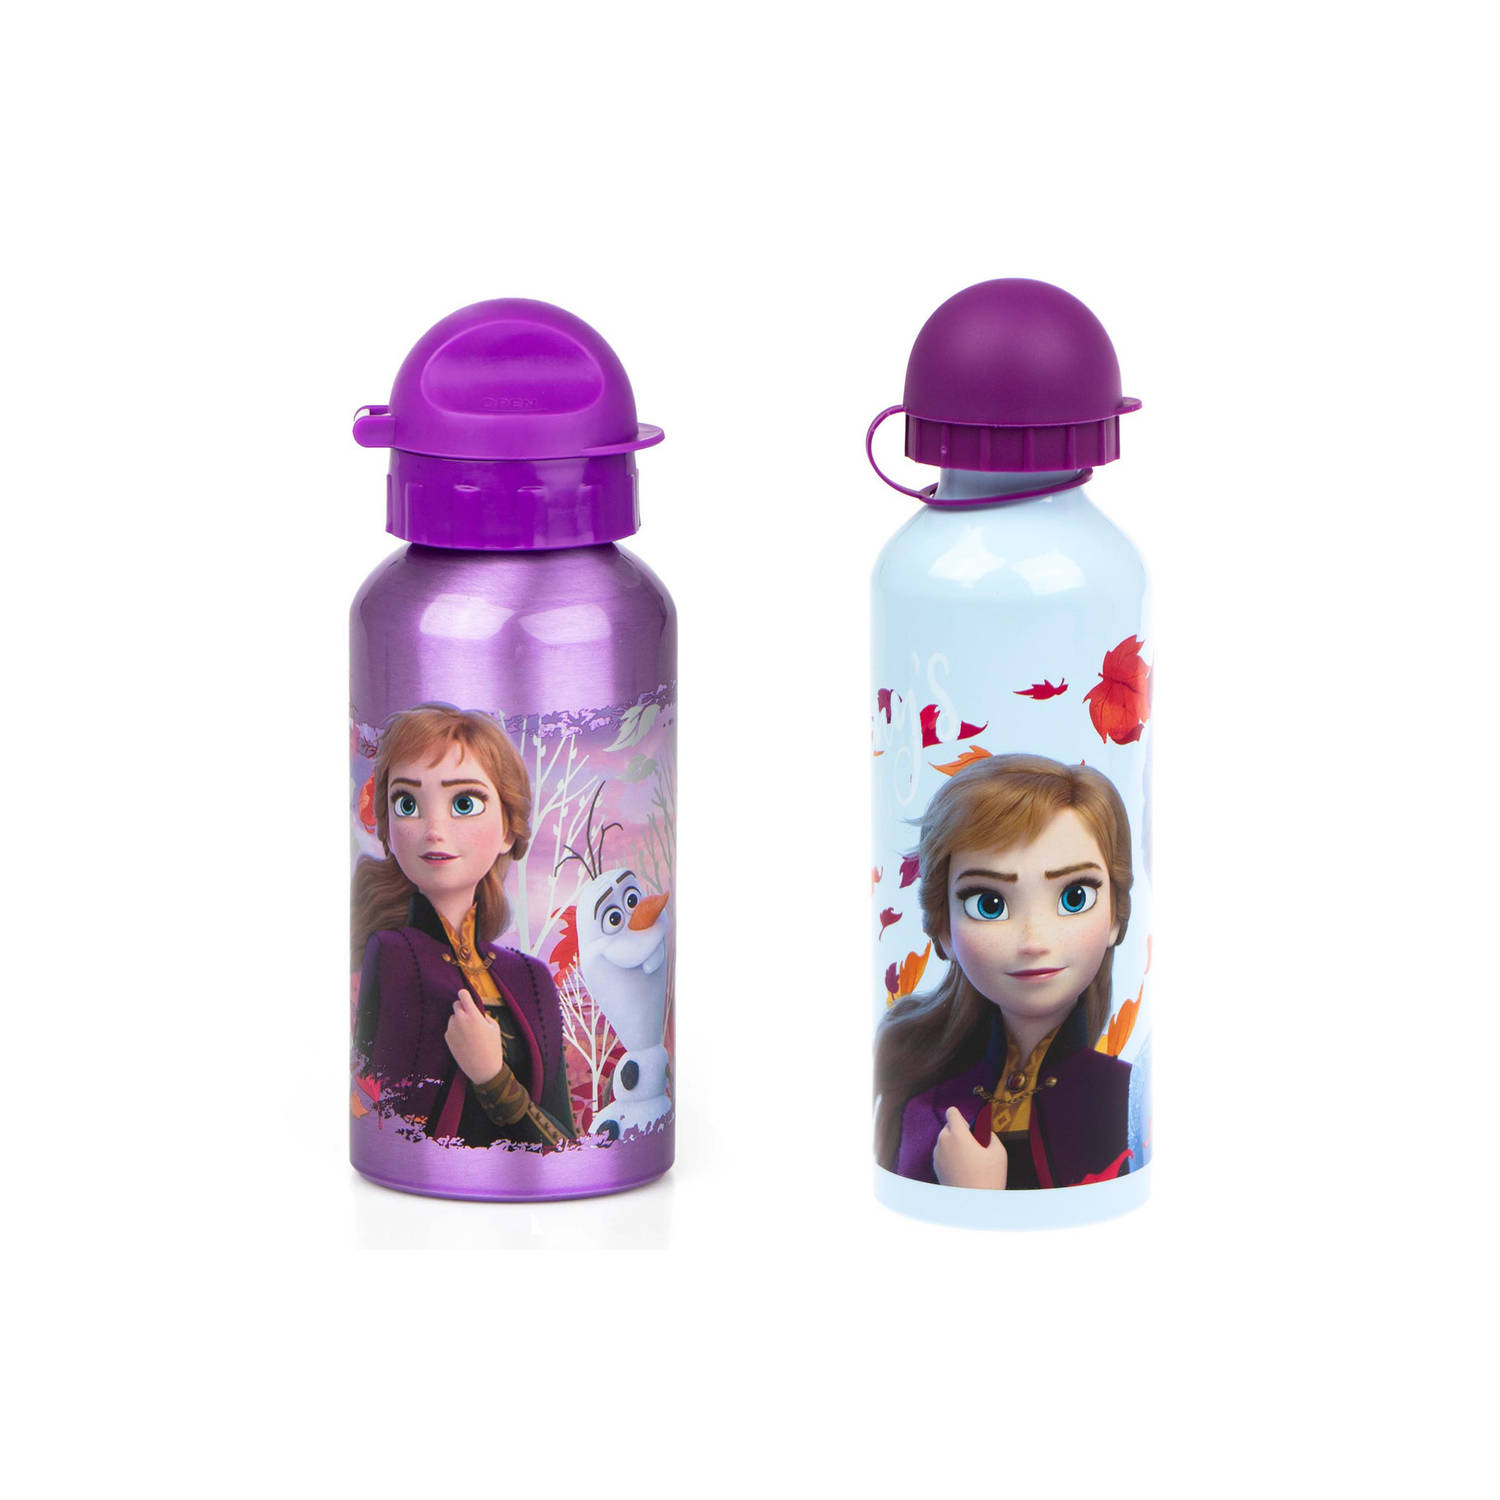 Disney Frozen Kinderdrinkfles veiligheidssluiting 2 stuks- per fles 500 ML - Drinkbeker - Frozen Disney aluminium fles